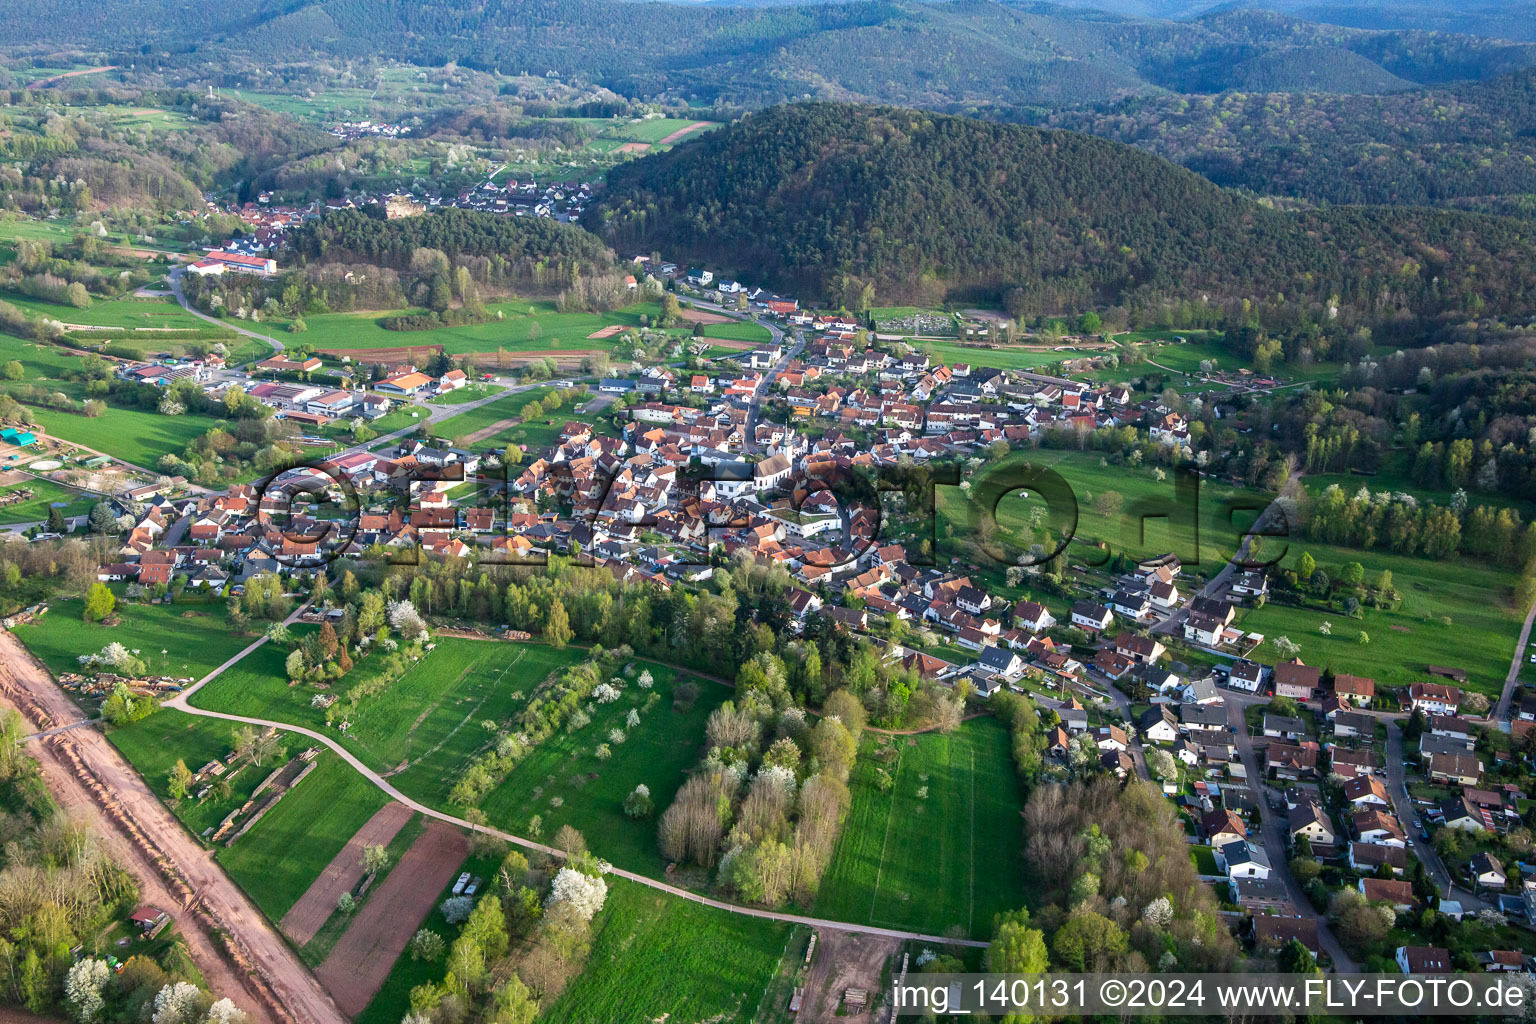 Vue aérienne de Quartier Gossersweiler in Gossersweiler-Stein dans le département Rhénanie-Palatinat, Allemagne